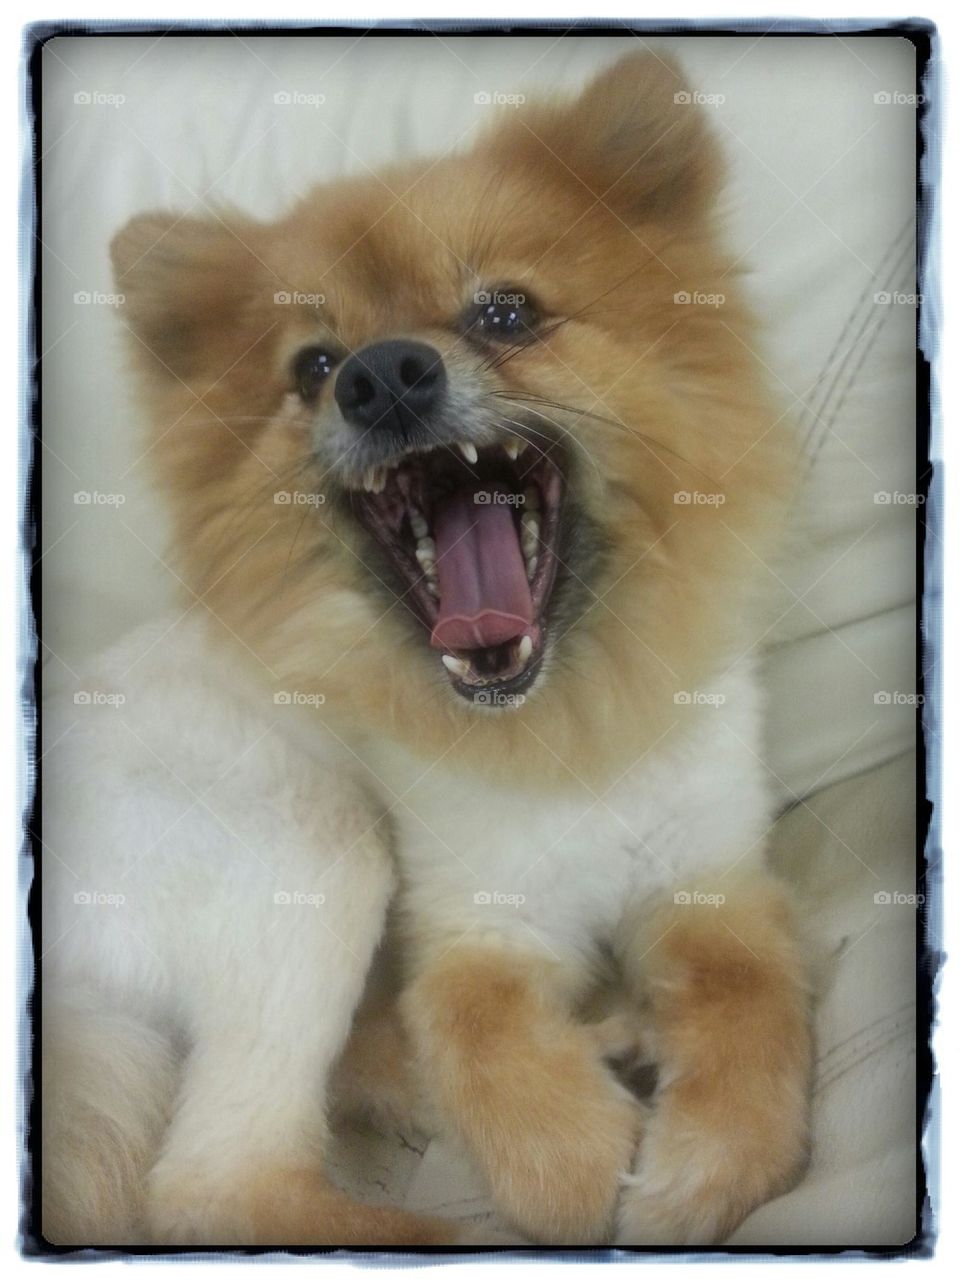 Big Yawn!!